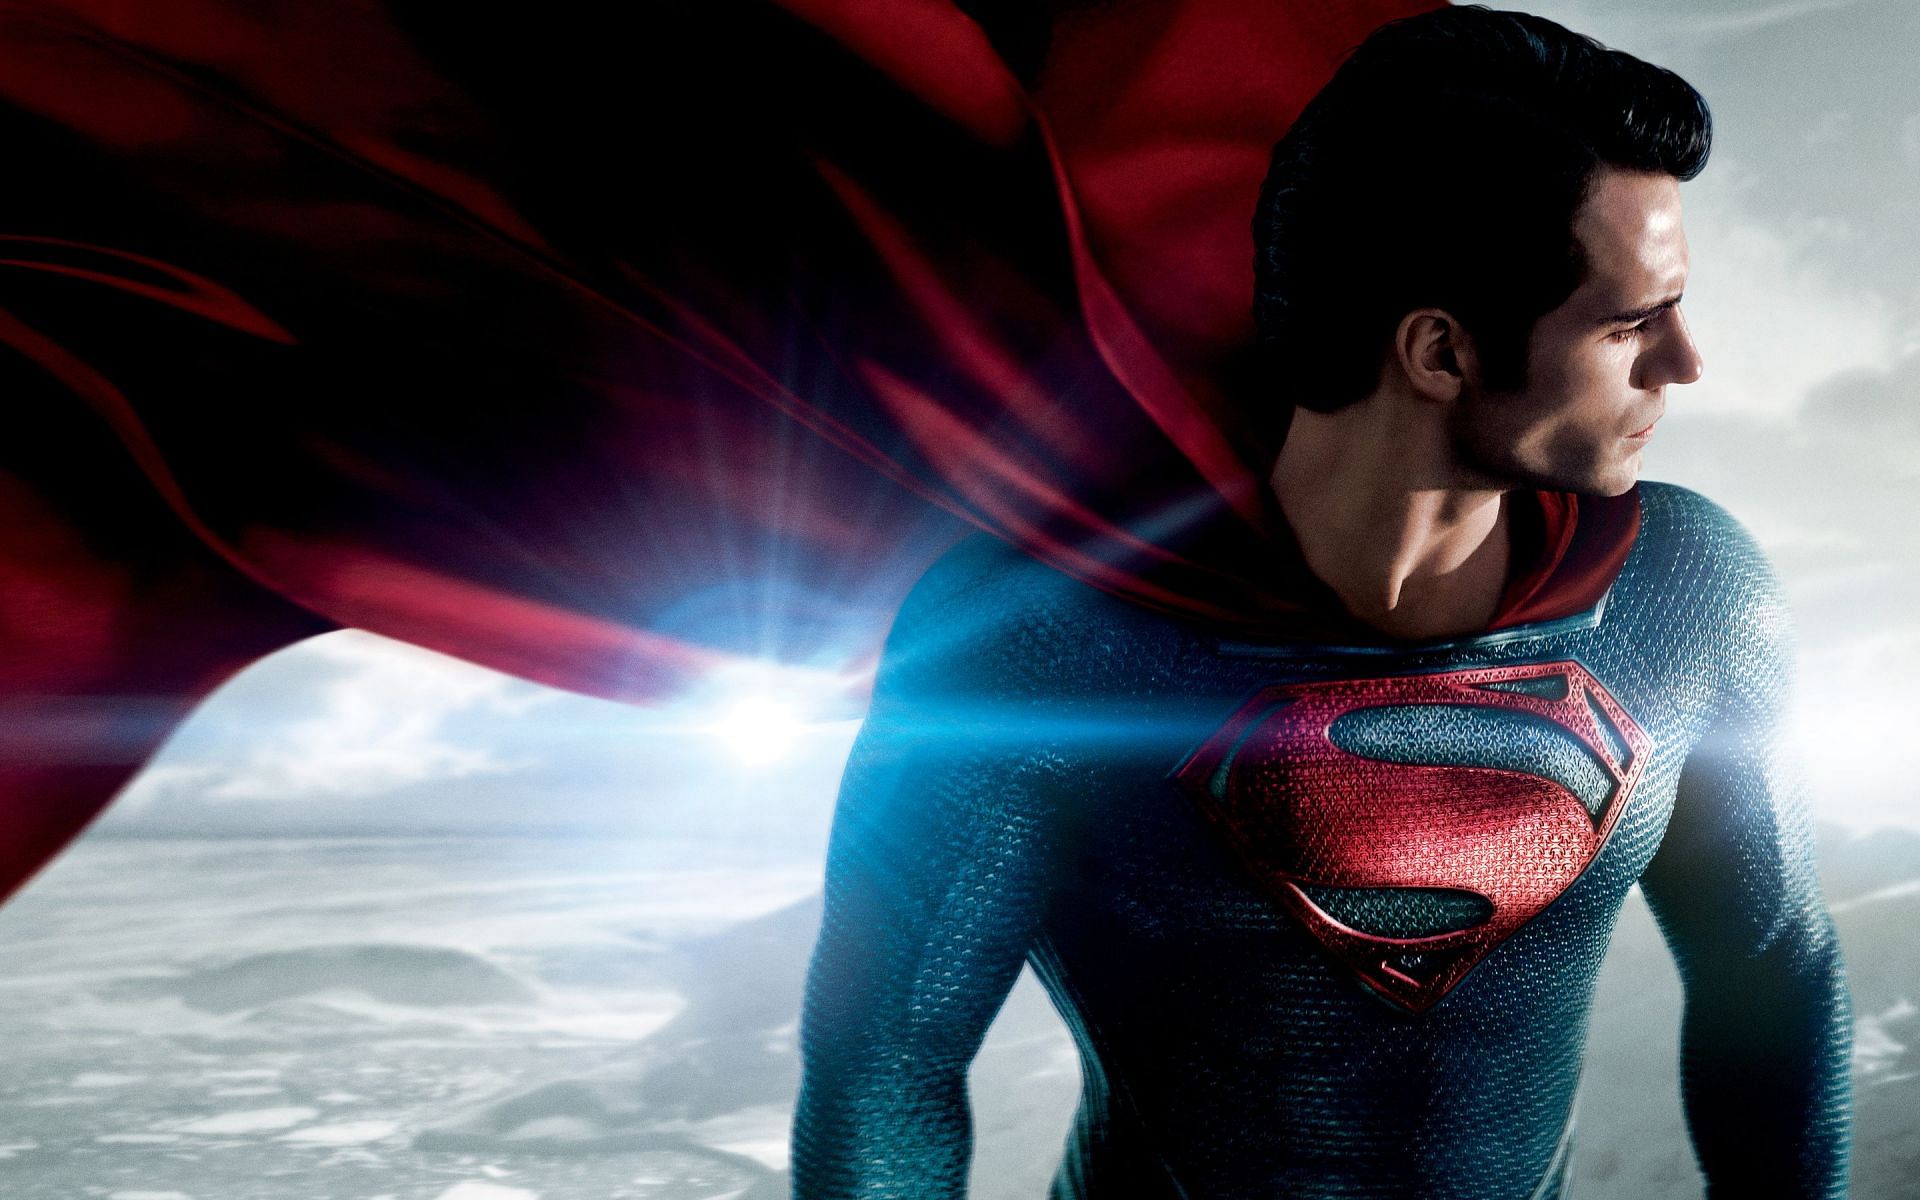 New Man of Steel Image: Superman and Lois Lane Strike Iconic Pose